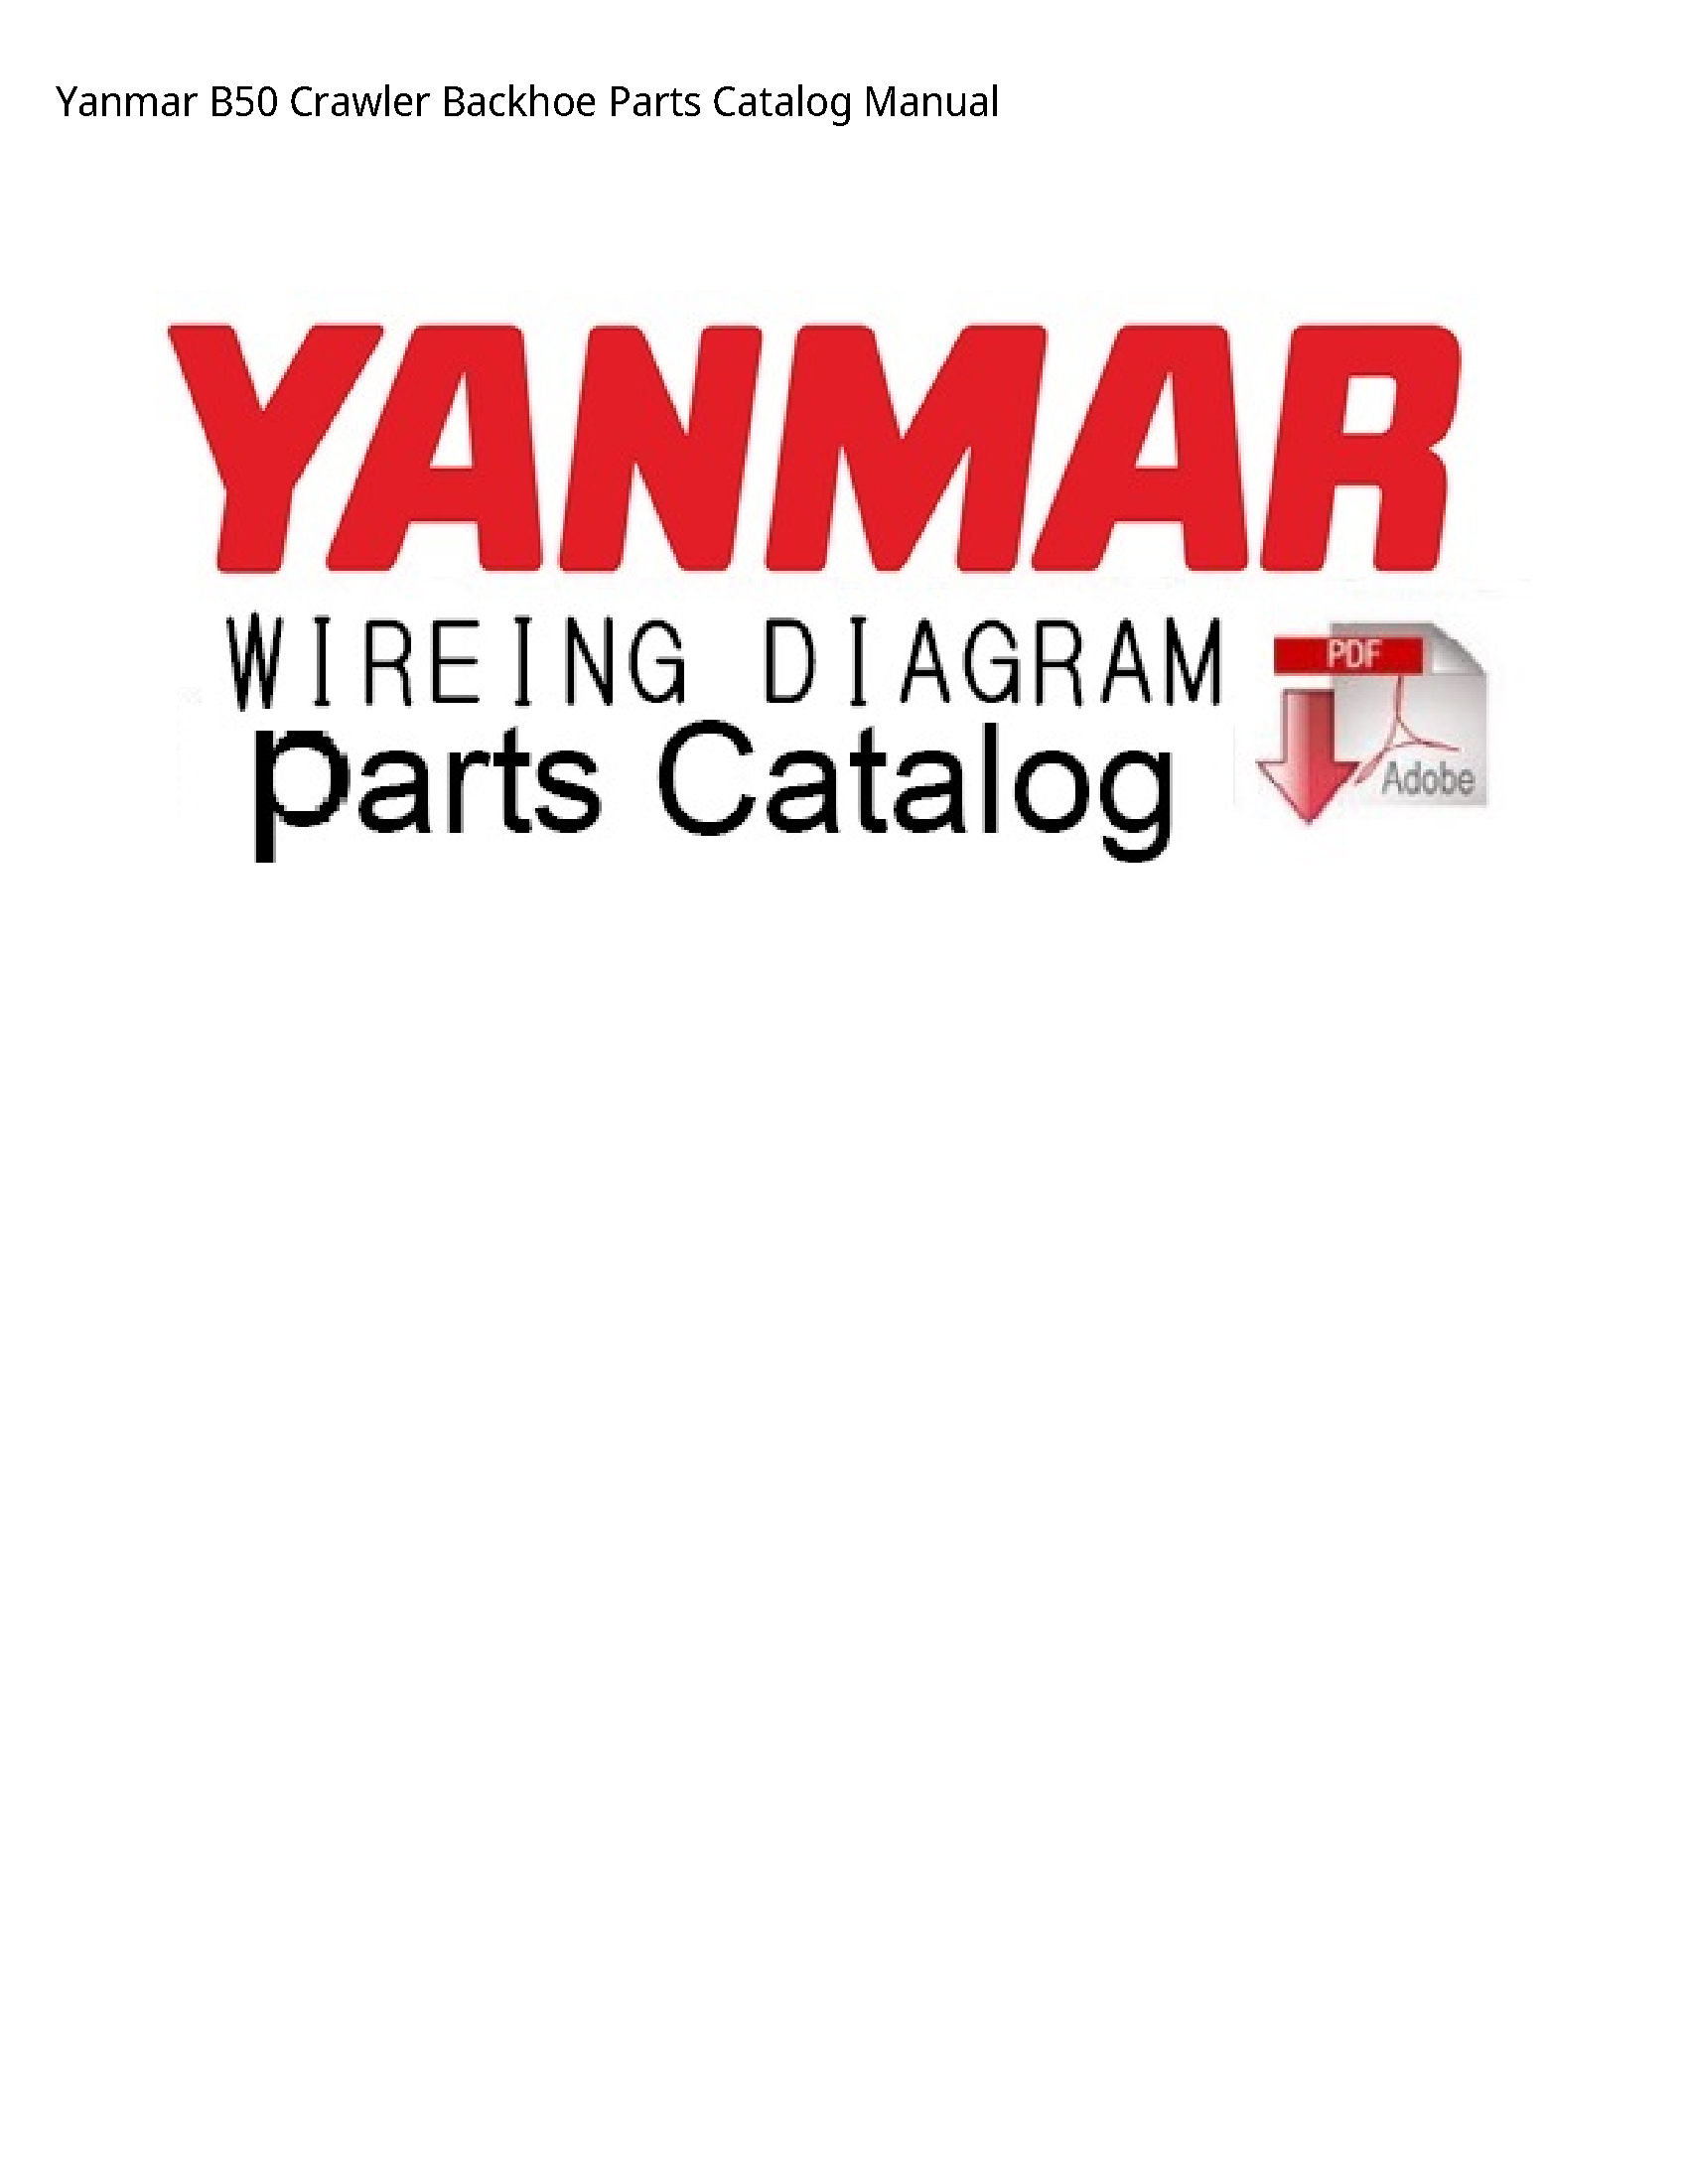 Yanmar B50 Crawler Backhoe Parts Catalog manual